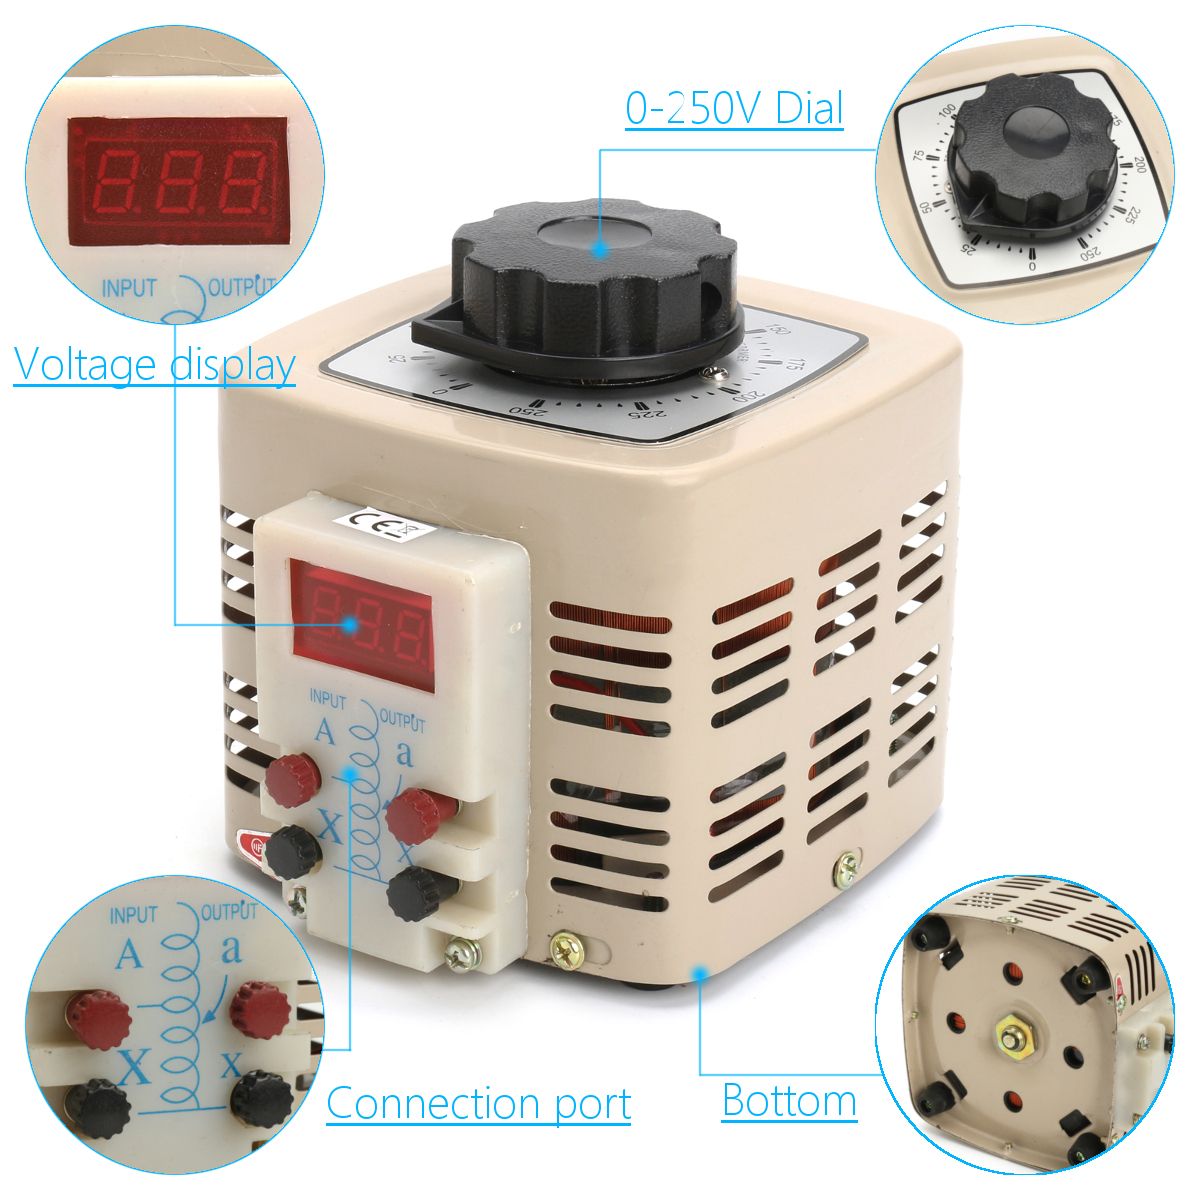 0-250V-2A-500W-AC-Variable-Digital-Voltage-Regulator-Transformer-Power-Supplies-Voltage-Transformer-1392084